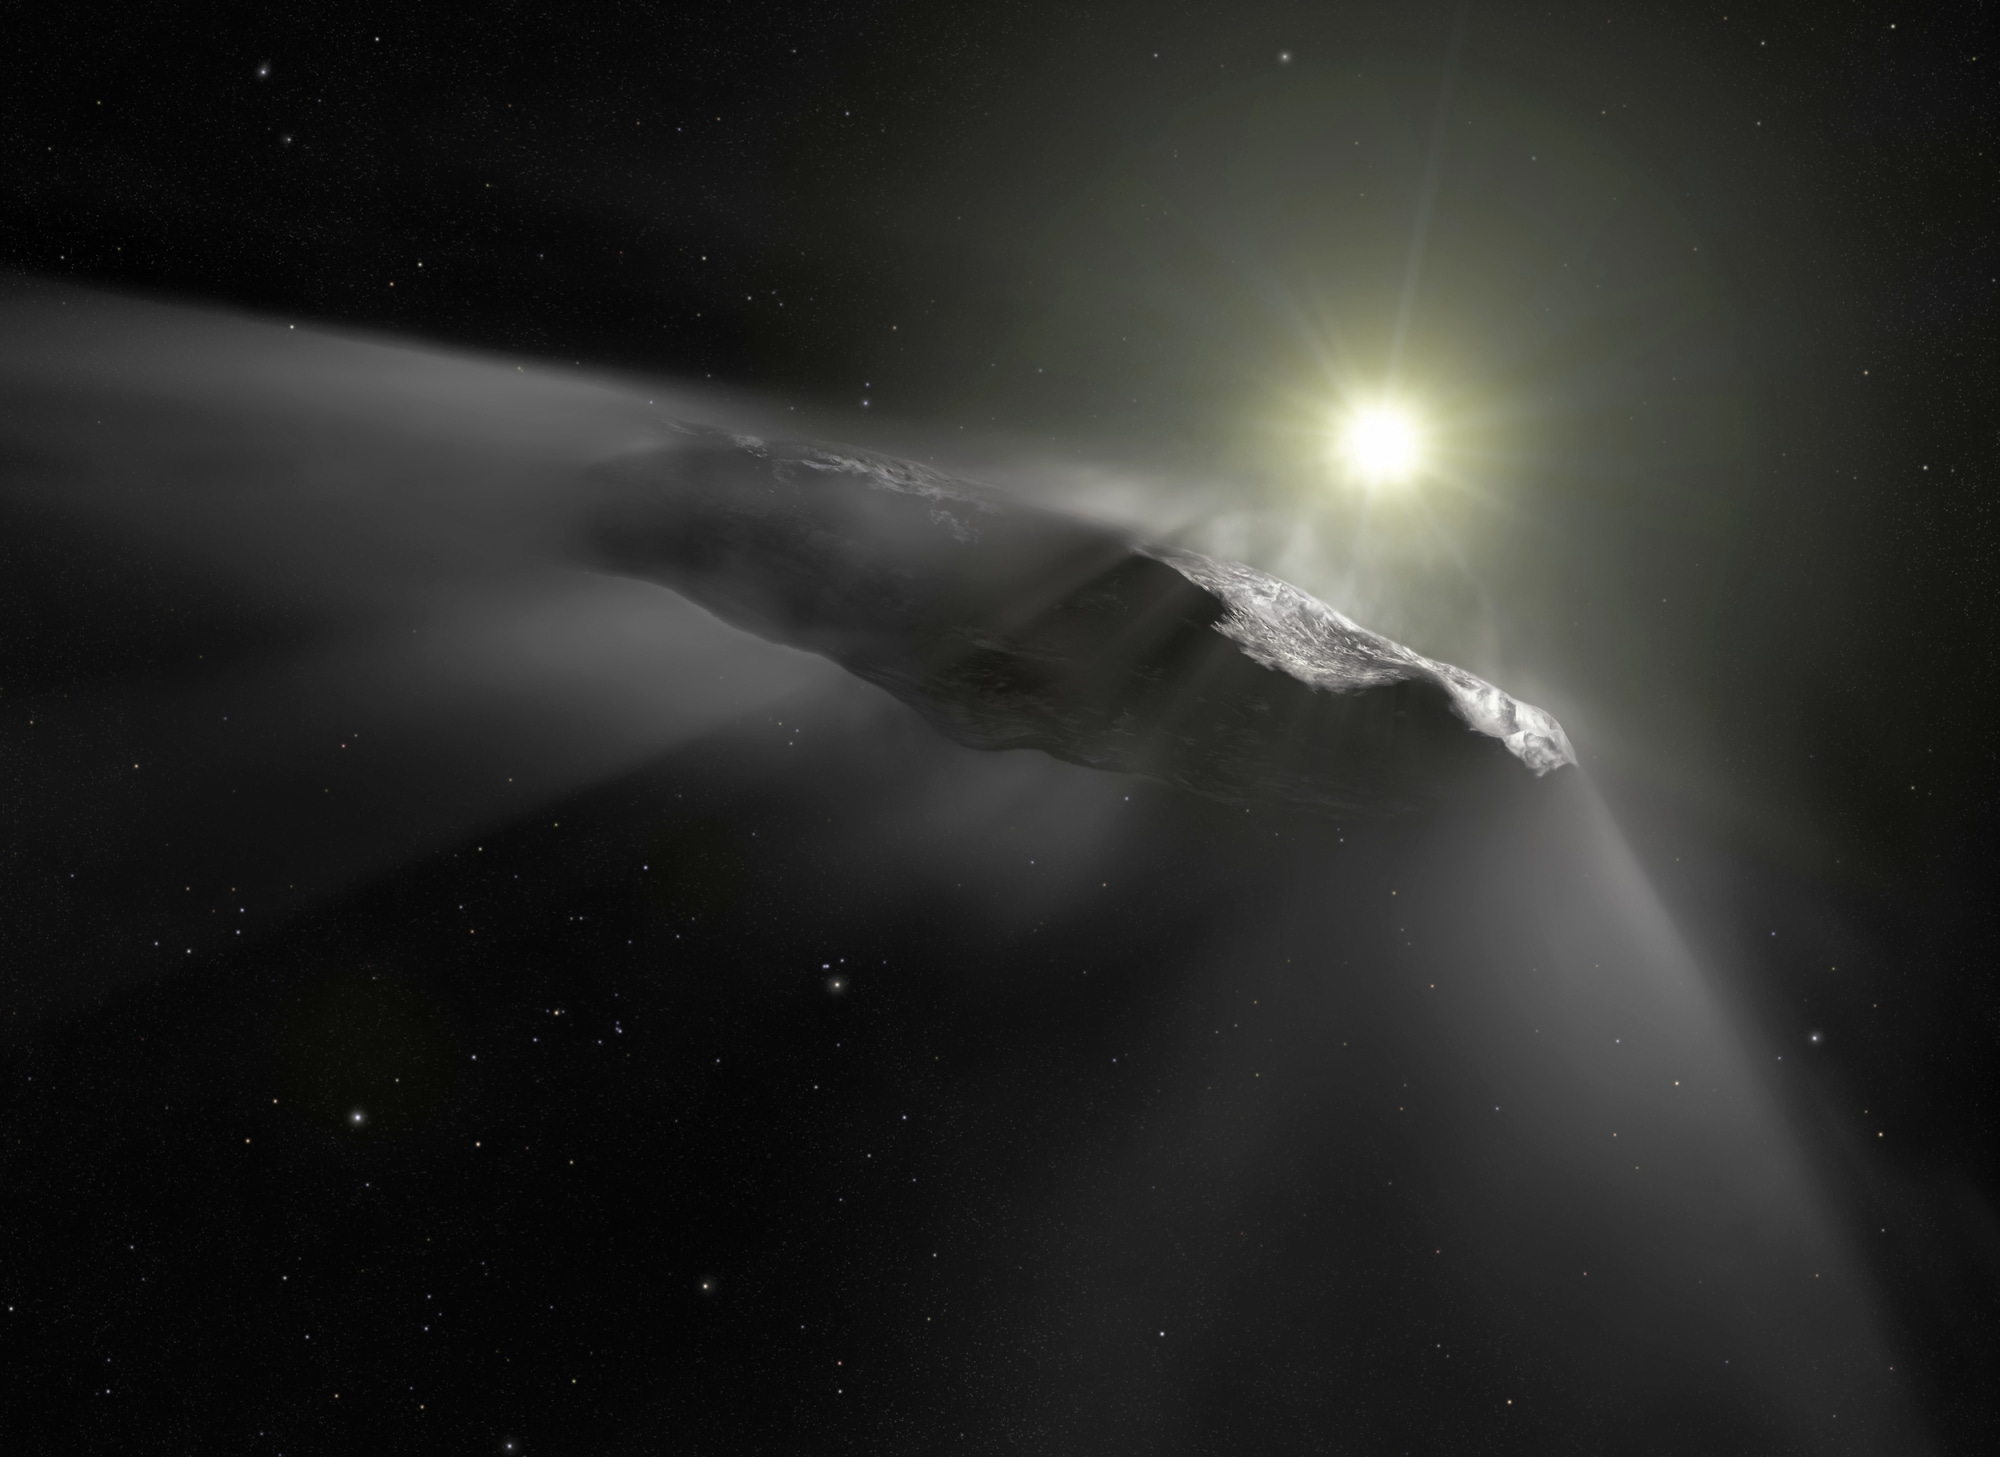 Image of interstellar object, Oumuamua